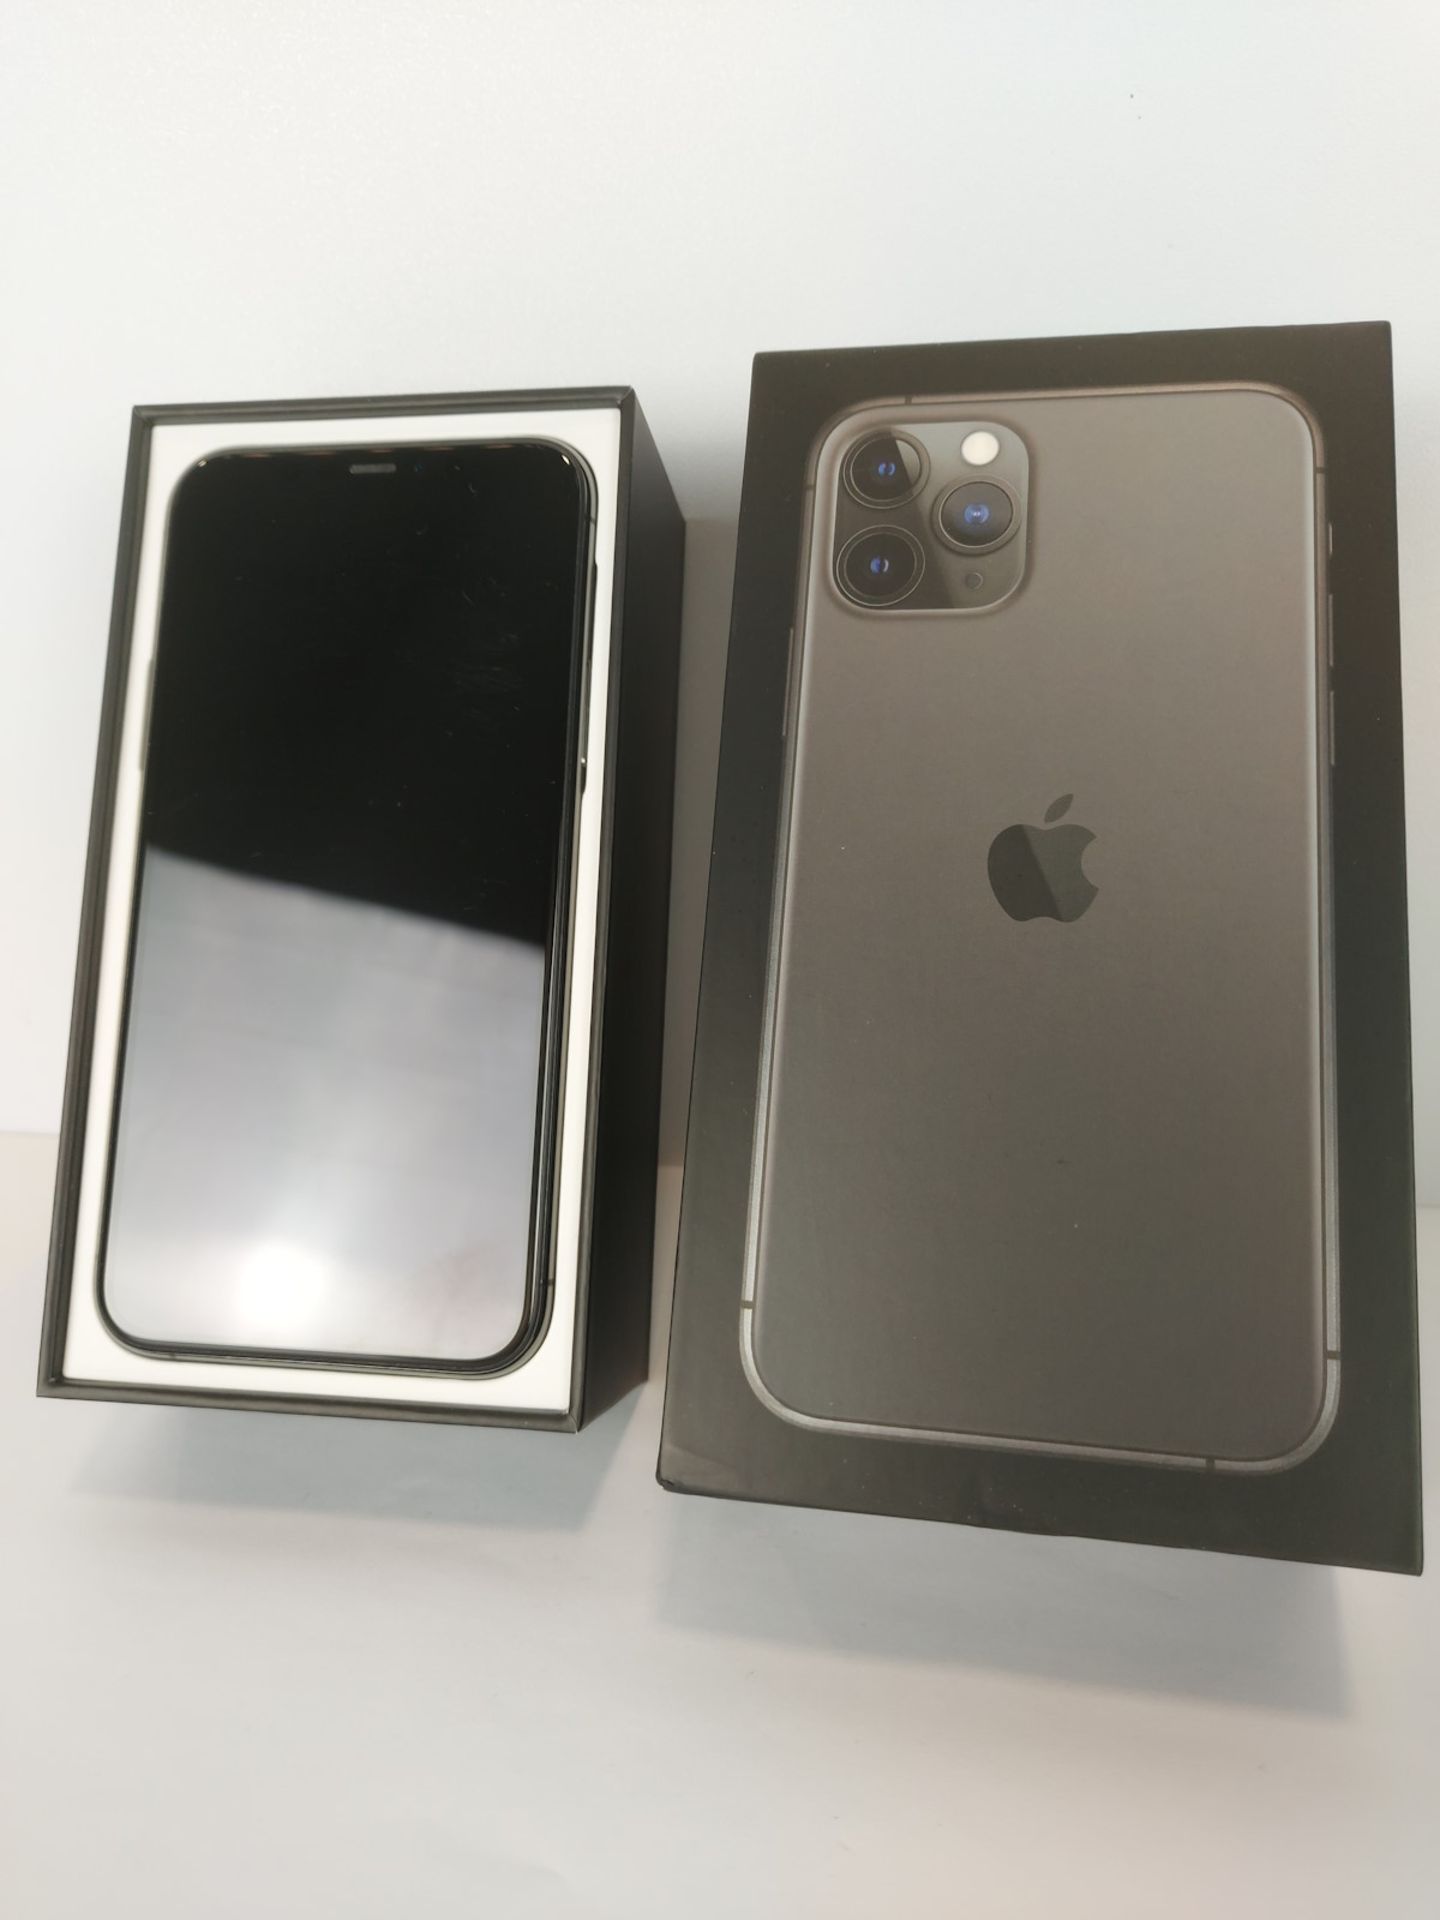 Apple iPhone 11 Pro, Midnight Green, 64GB - Image 3 of 3